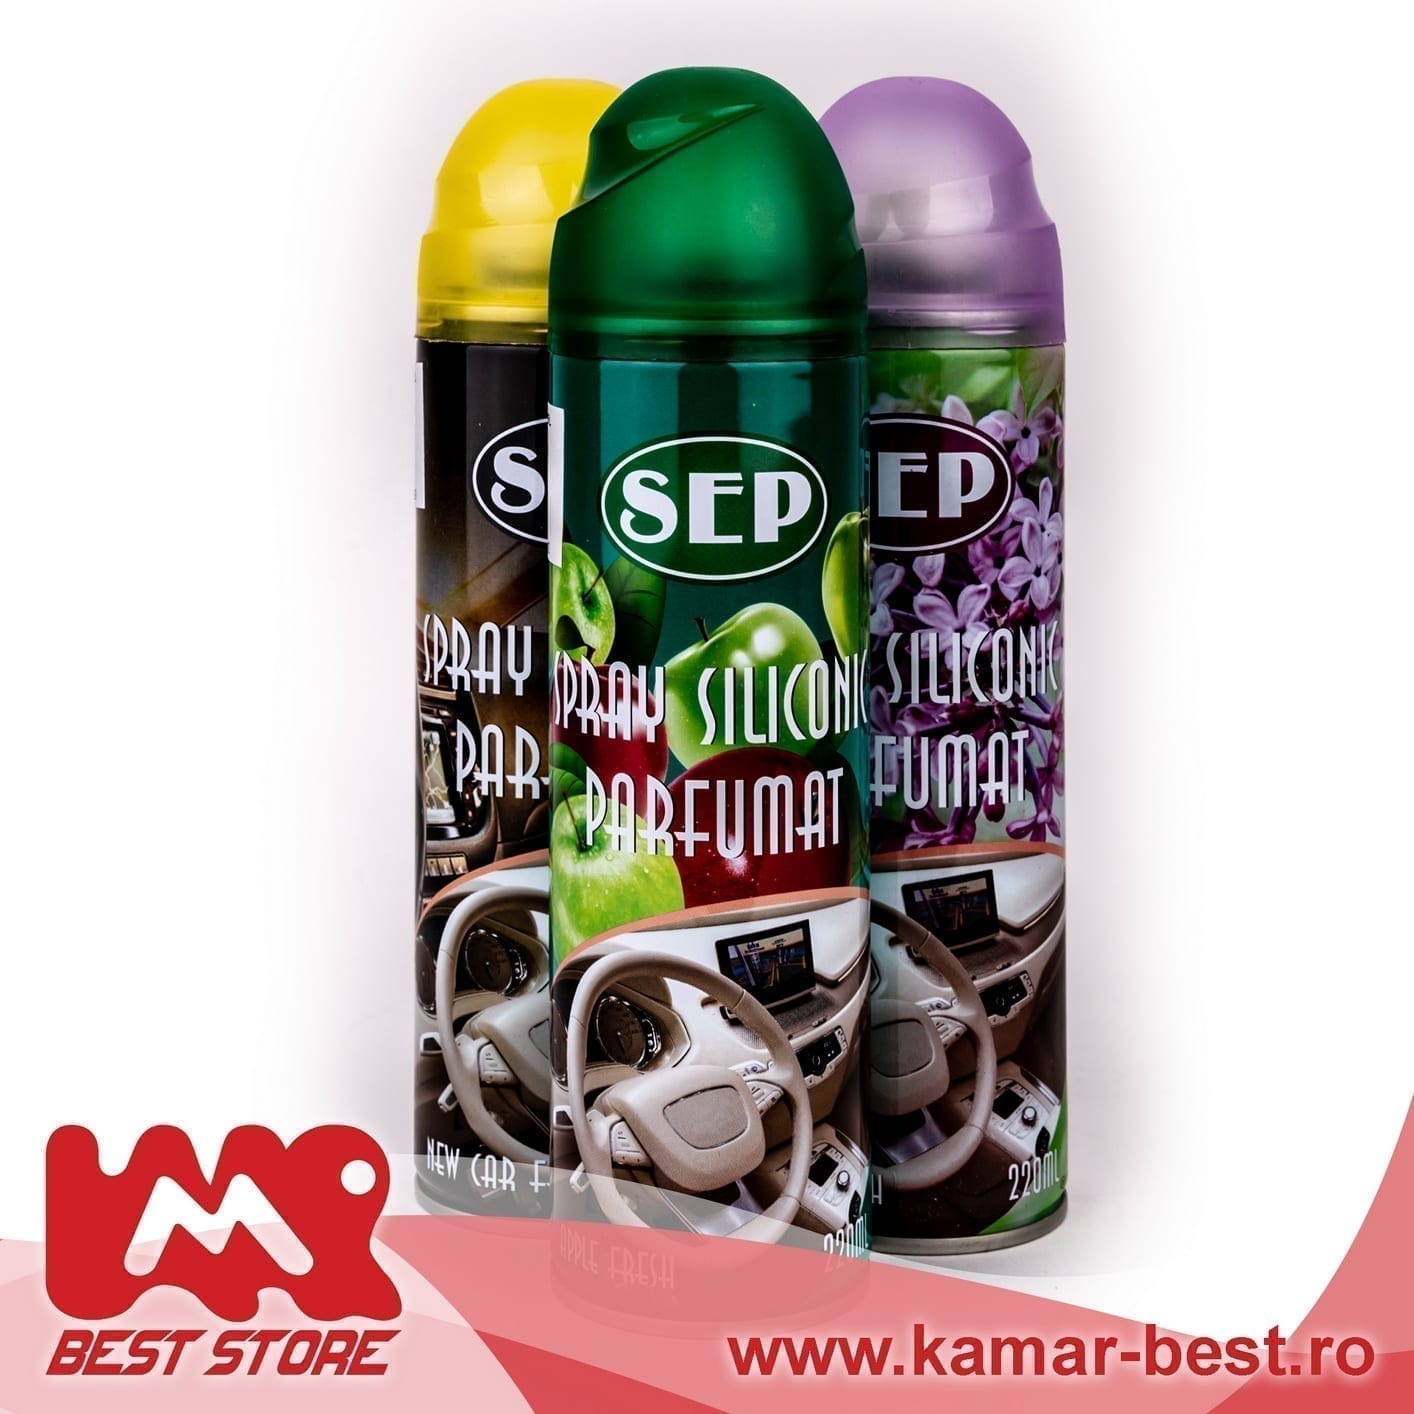 sep spray siliconic parfumat 220ml 2